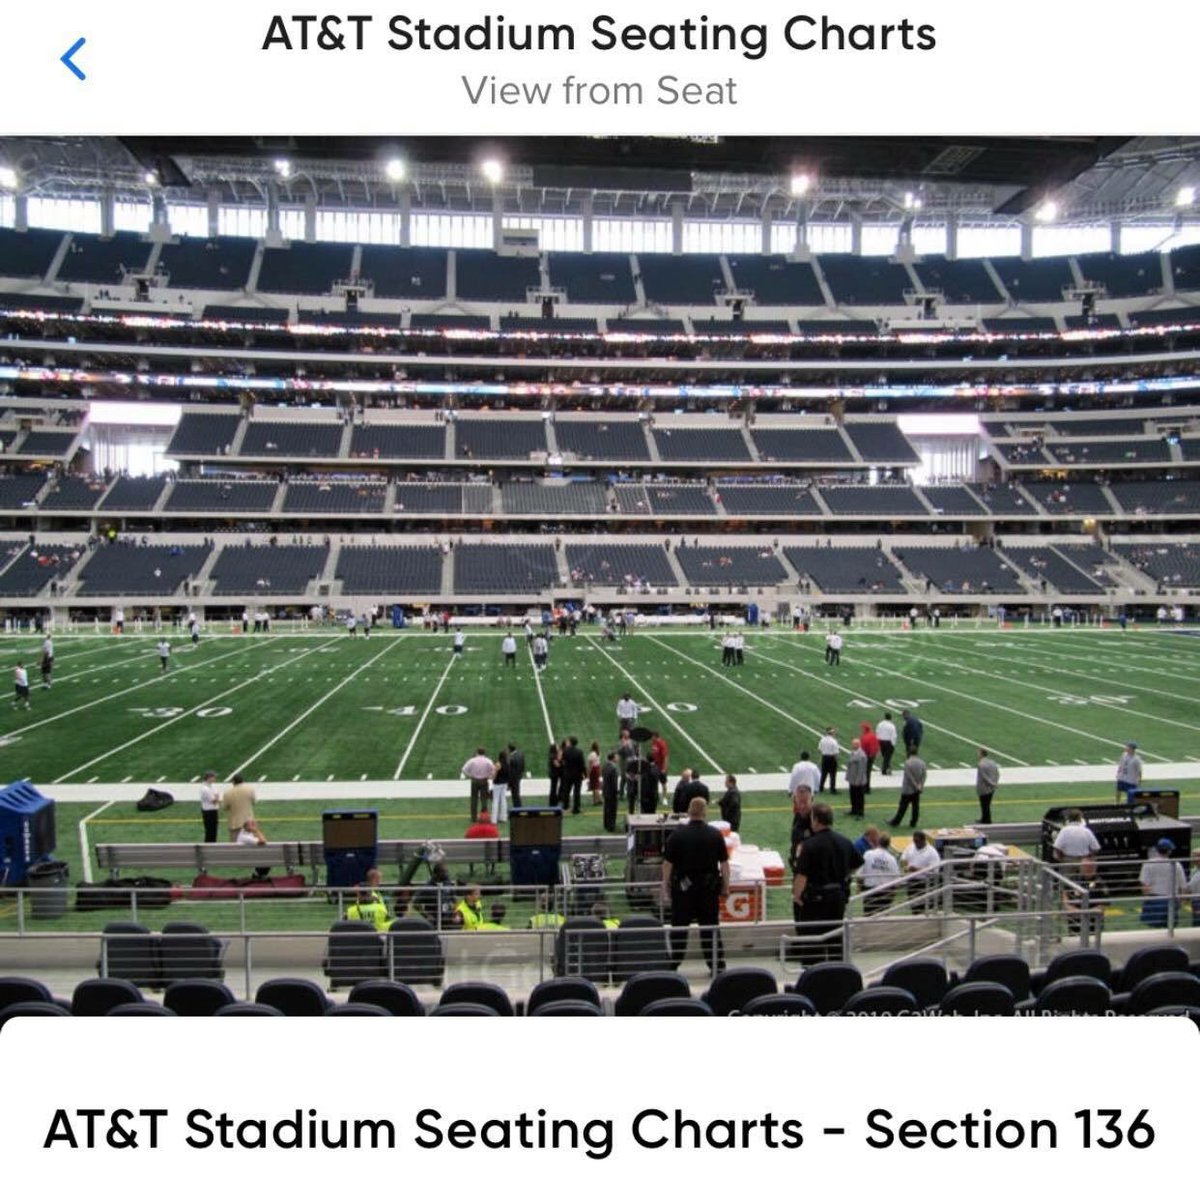 Titans Stadium Seating Chart View